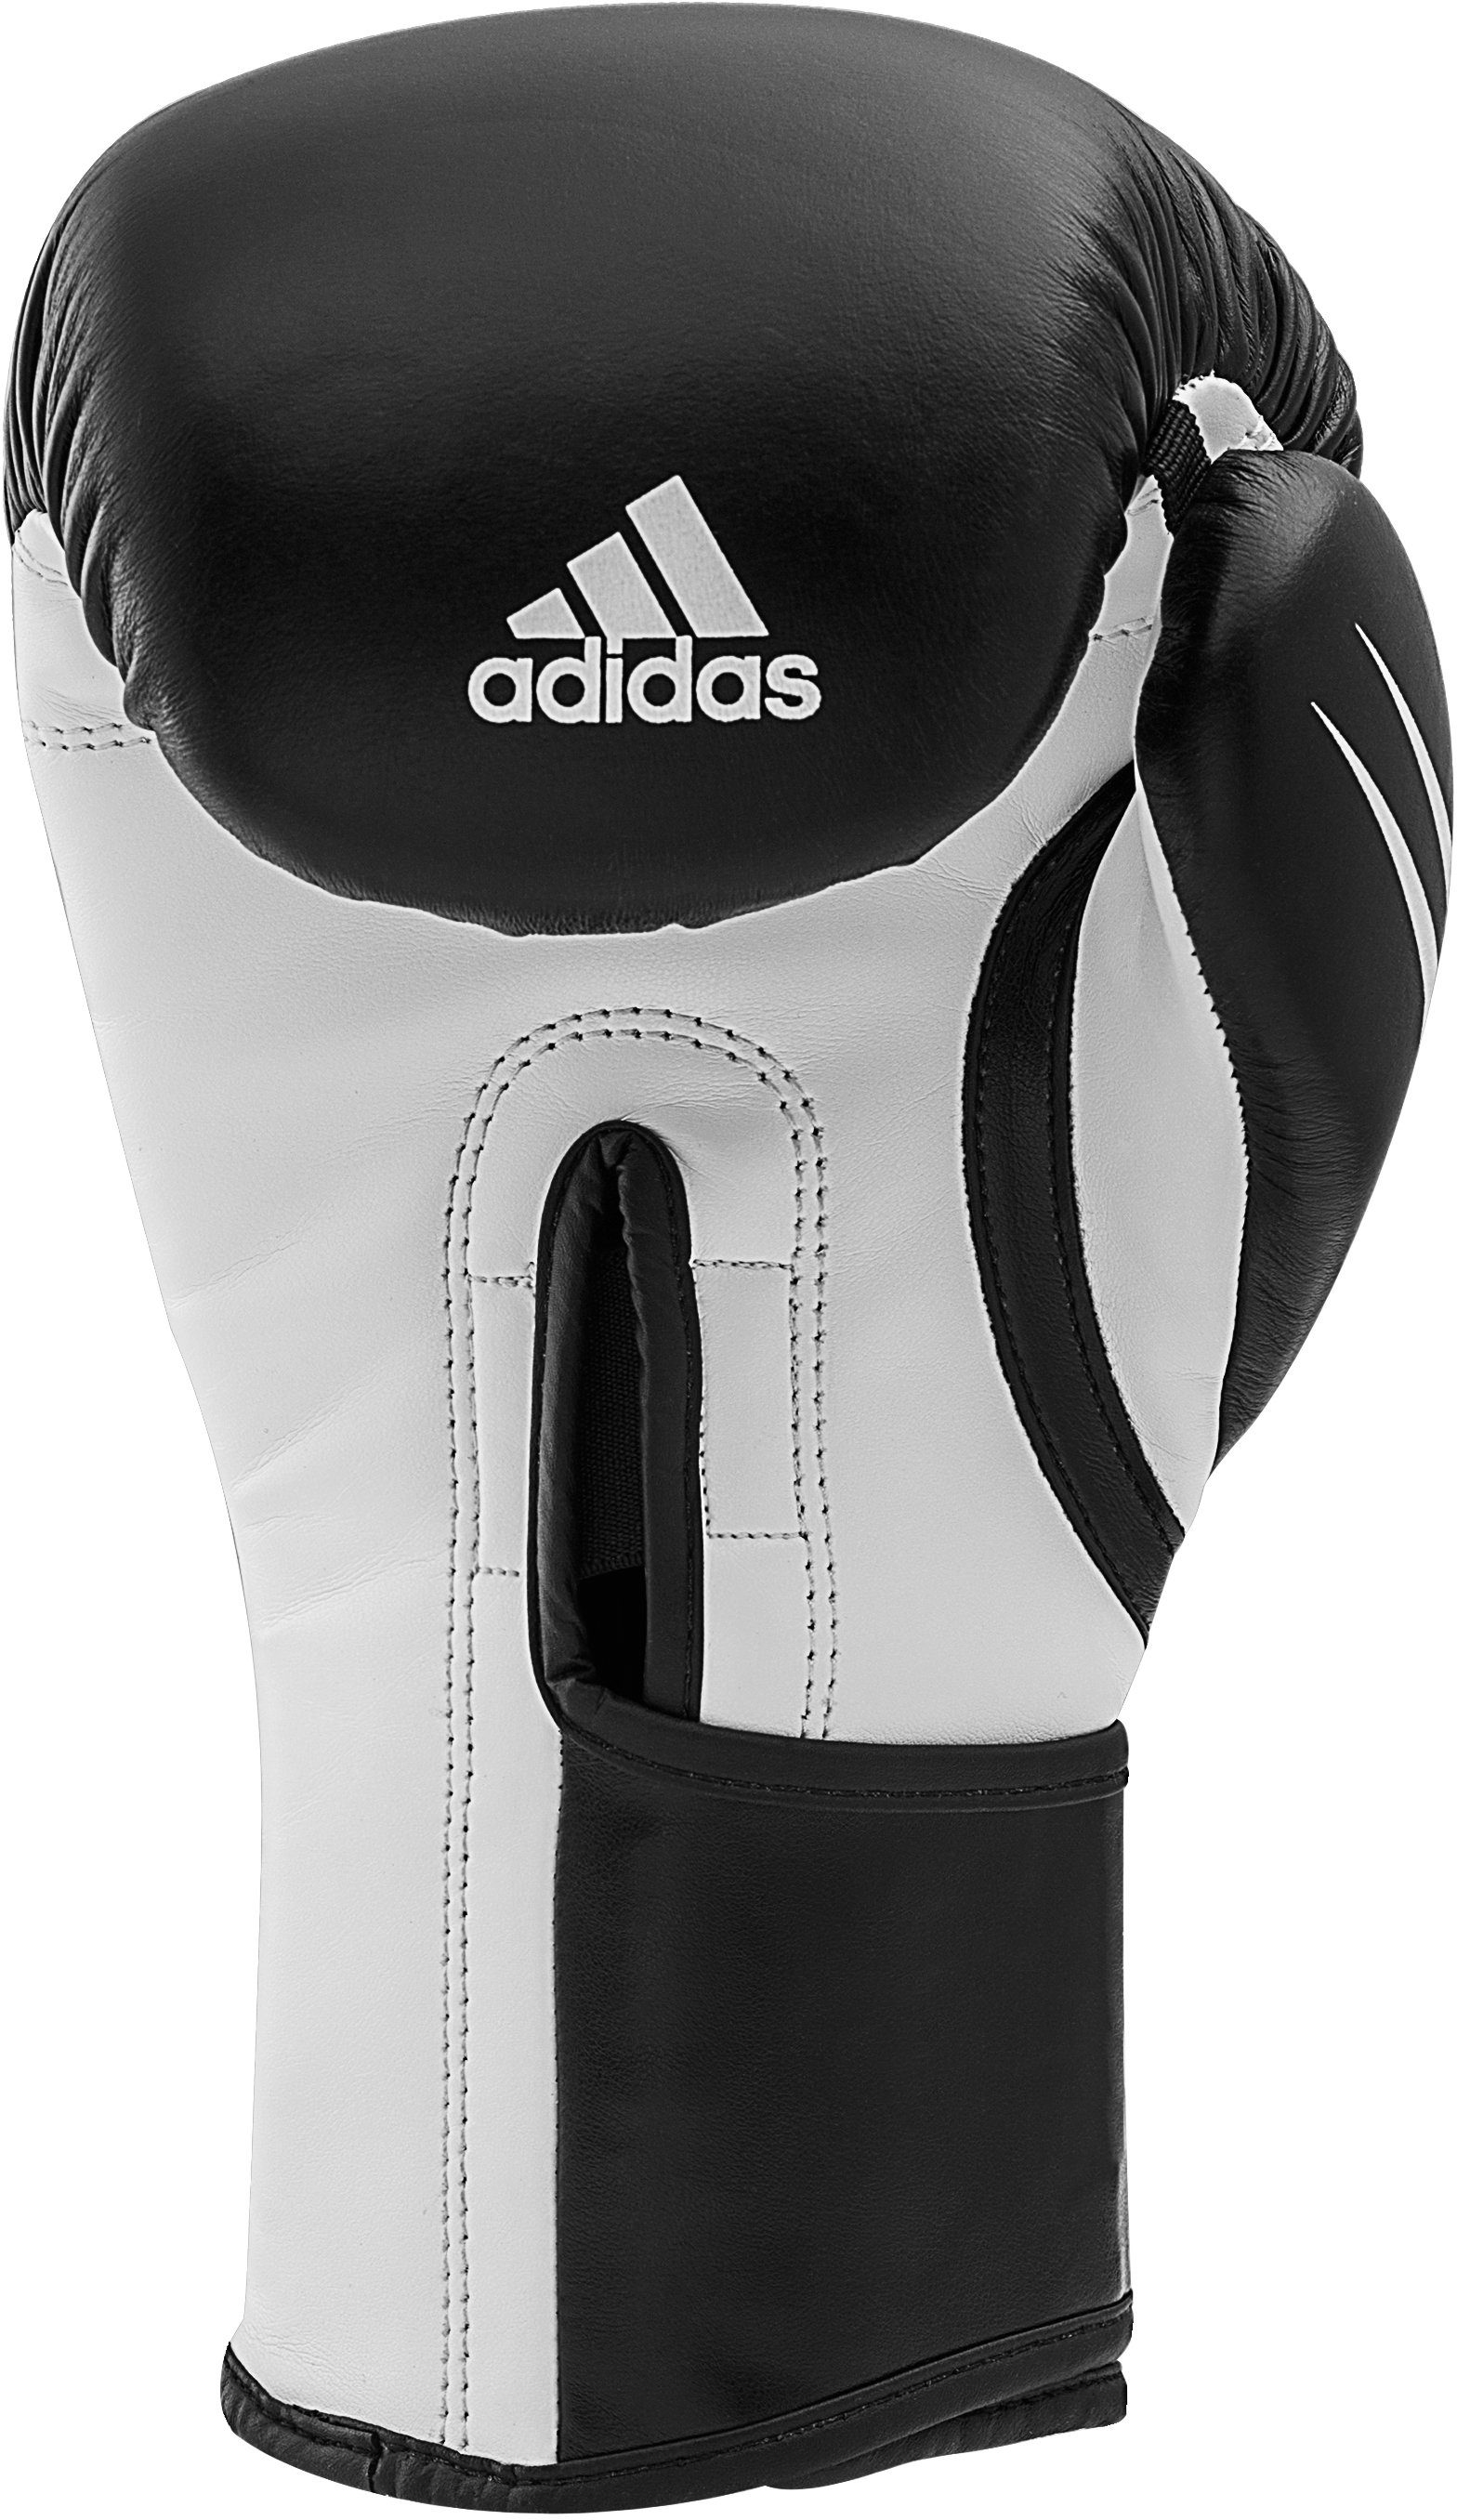 schwarz/weiß adidas Performance Boxhandschuhe